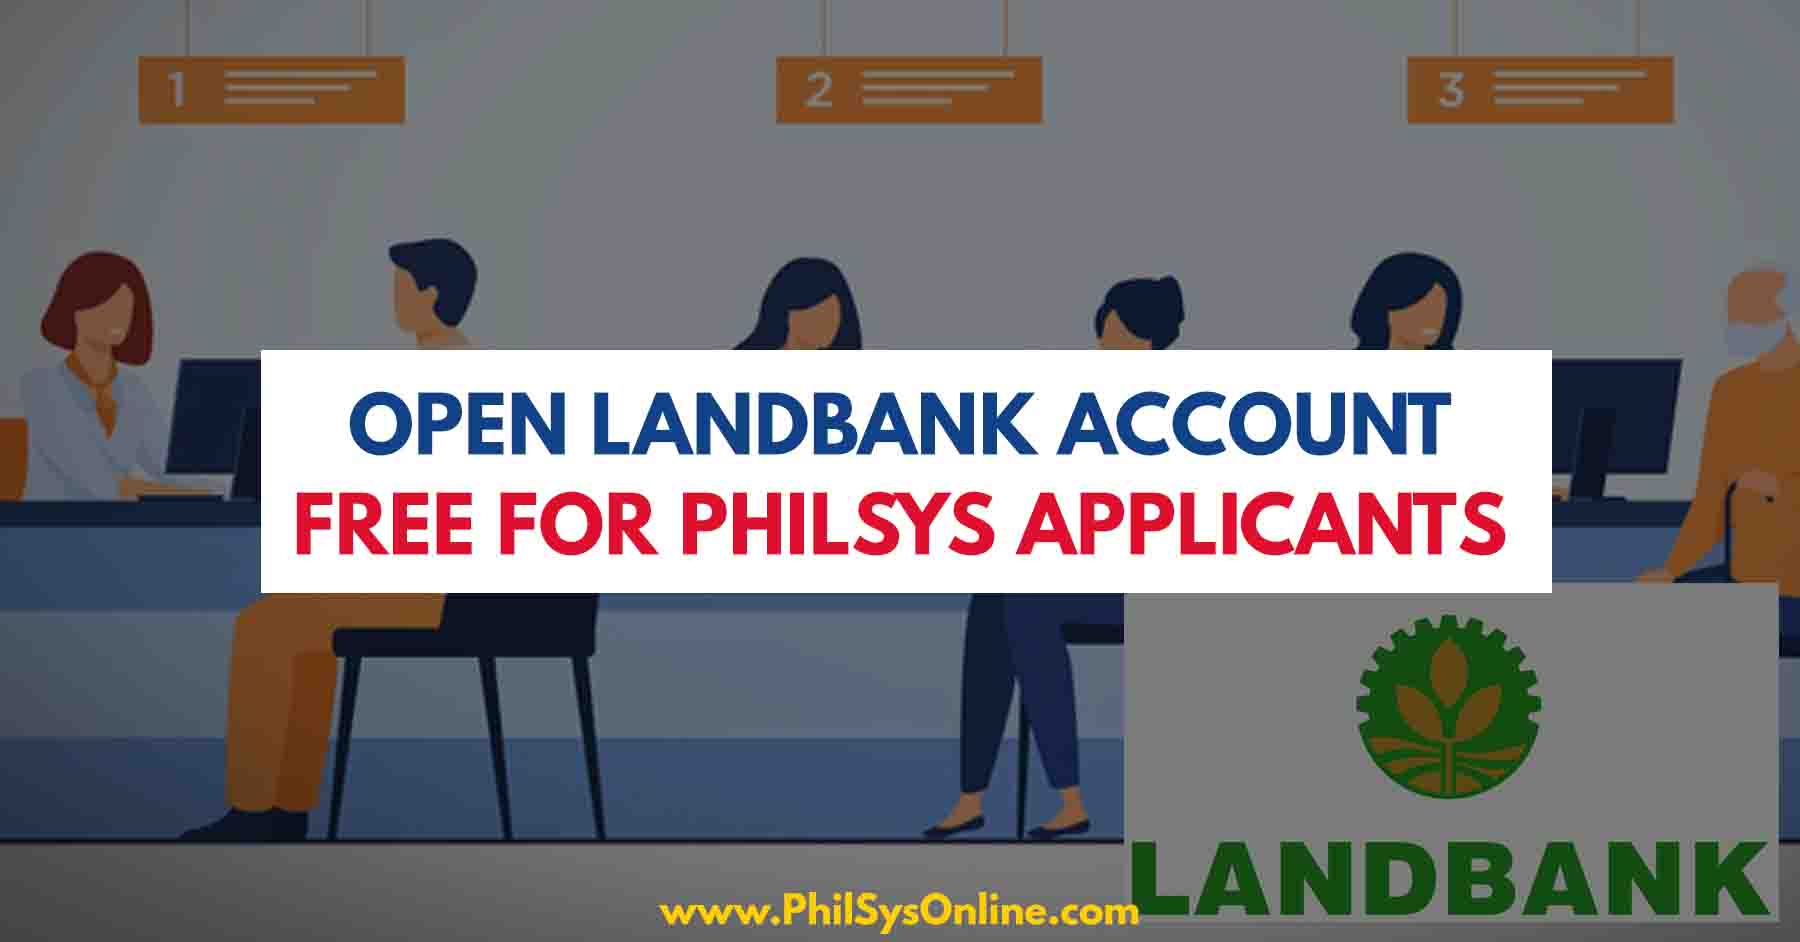 open landbank account philsys applicants